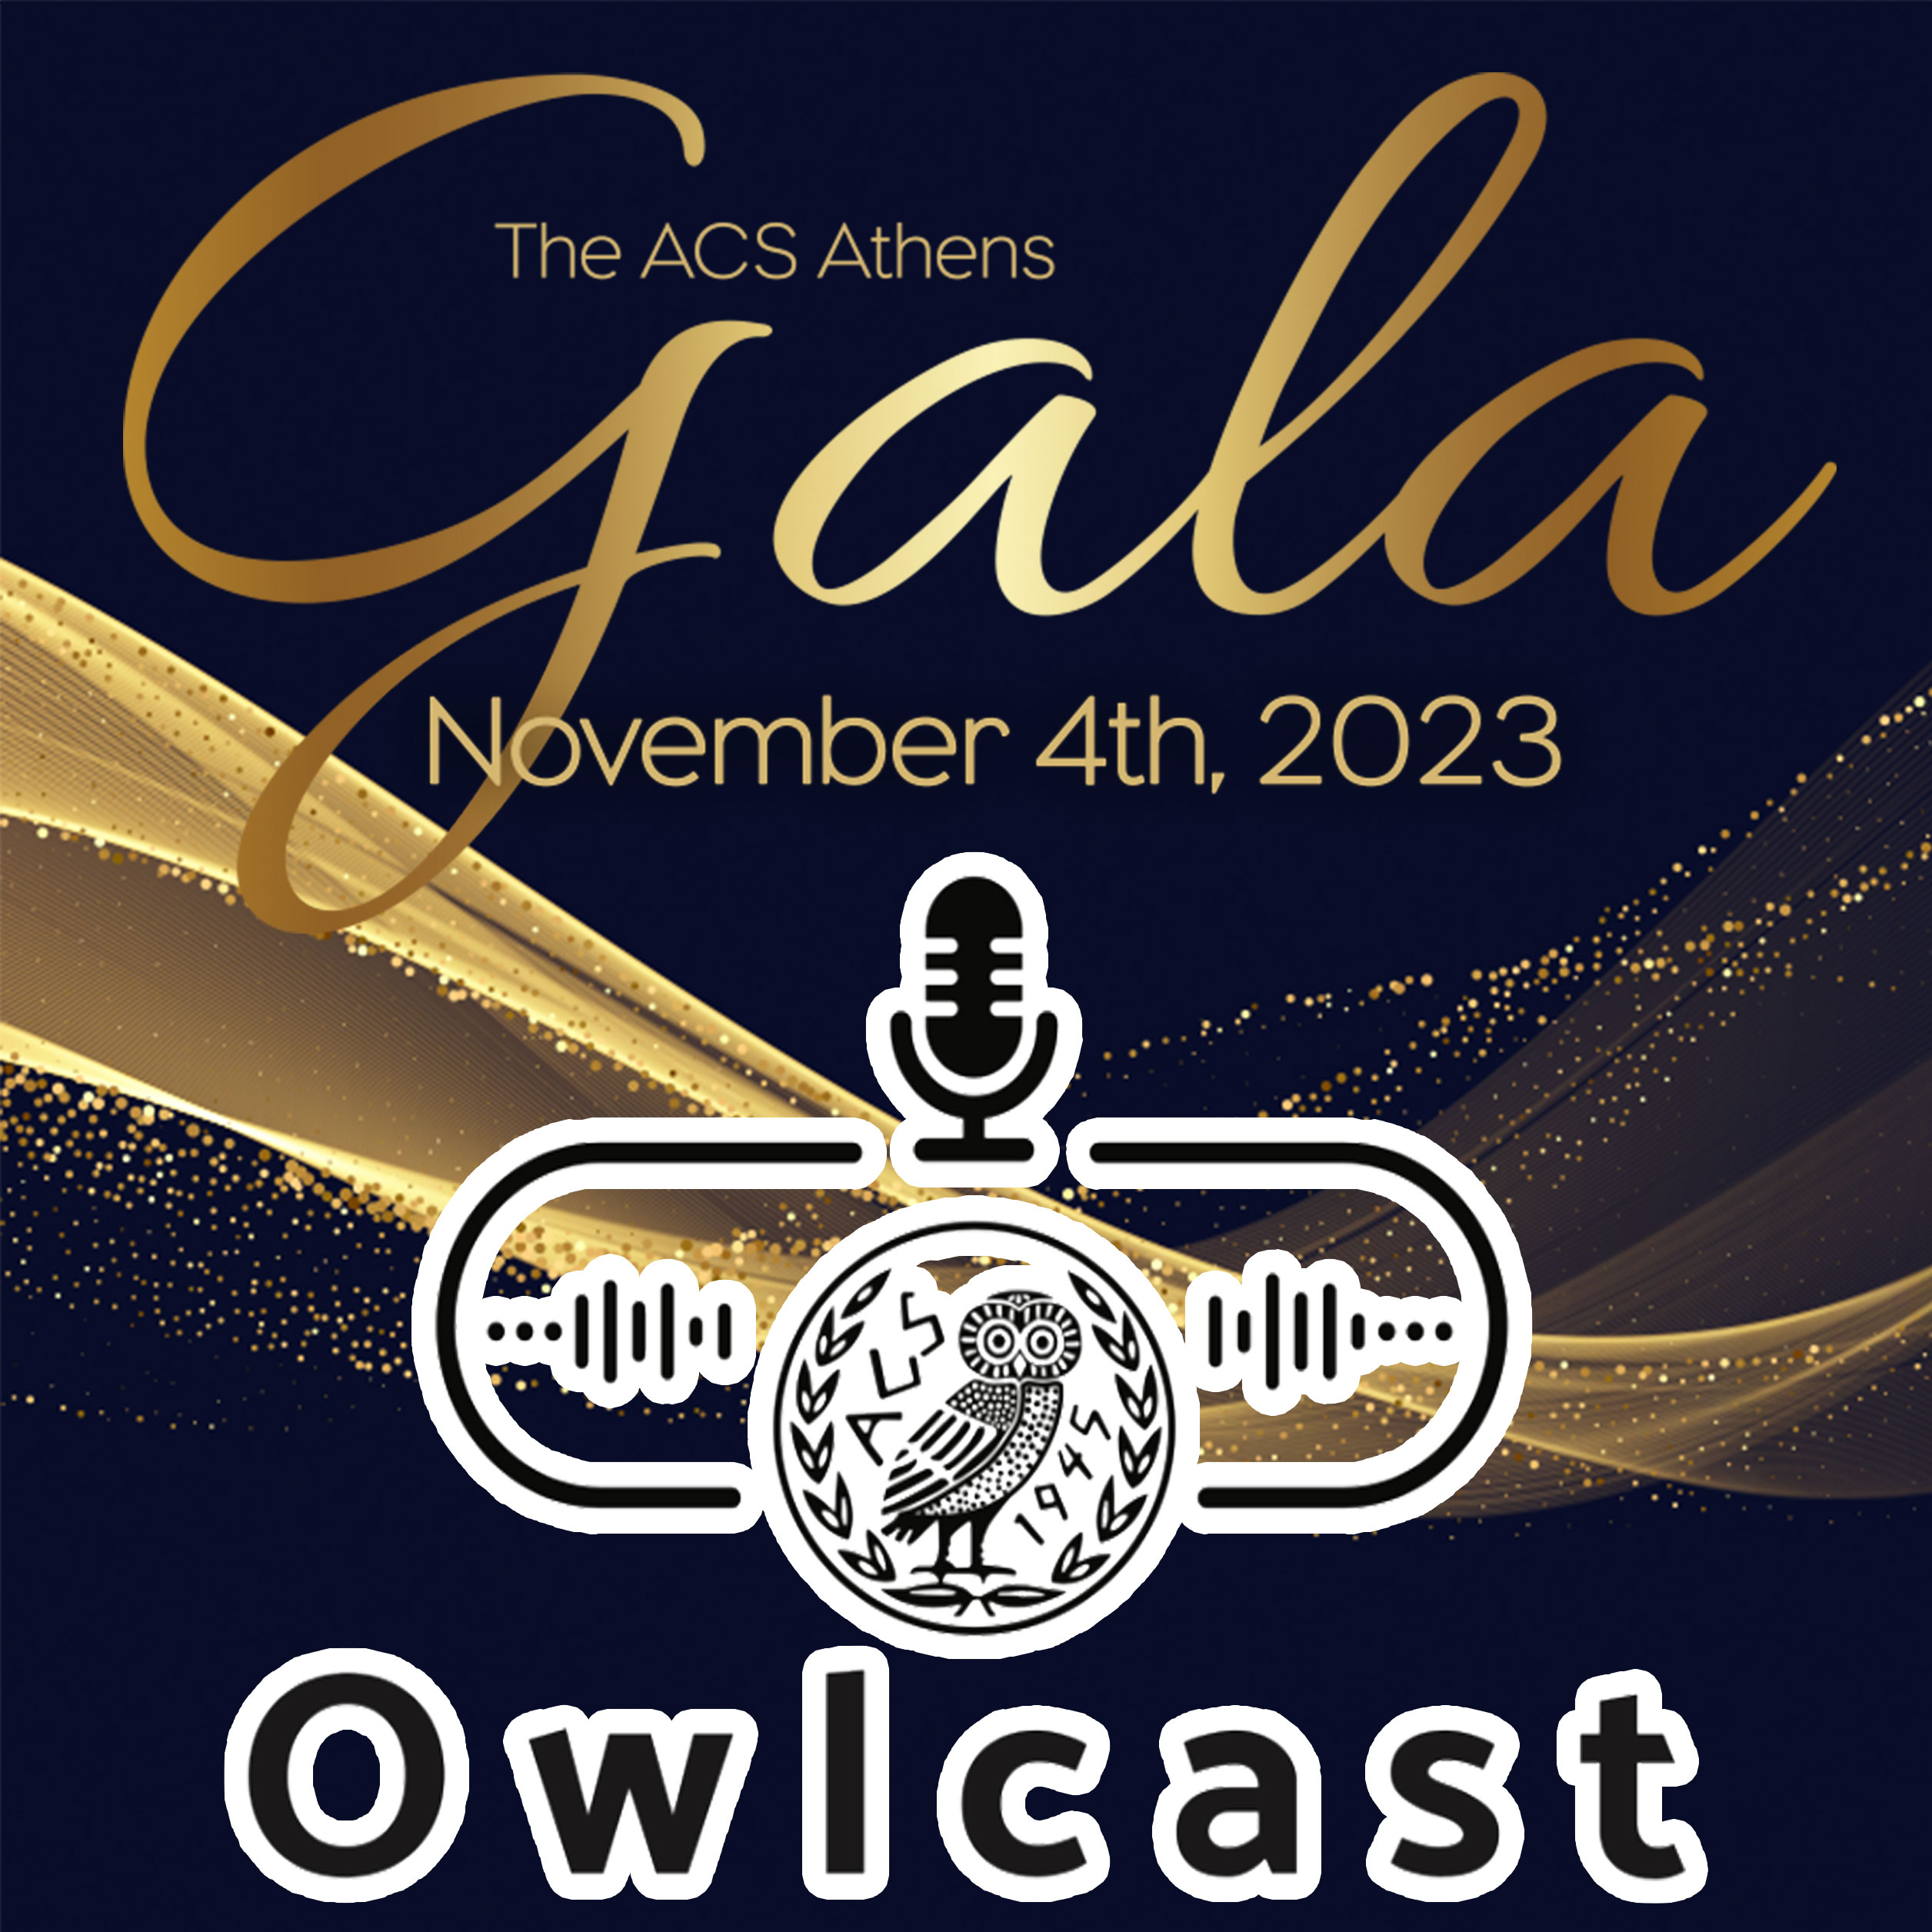 Owlcast 71 - The 2023 Gala Edition